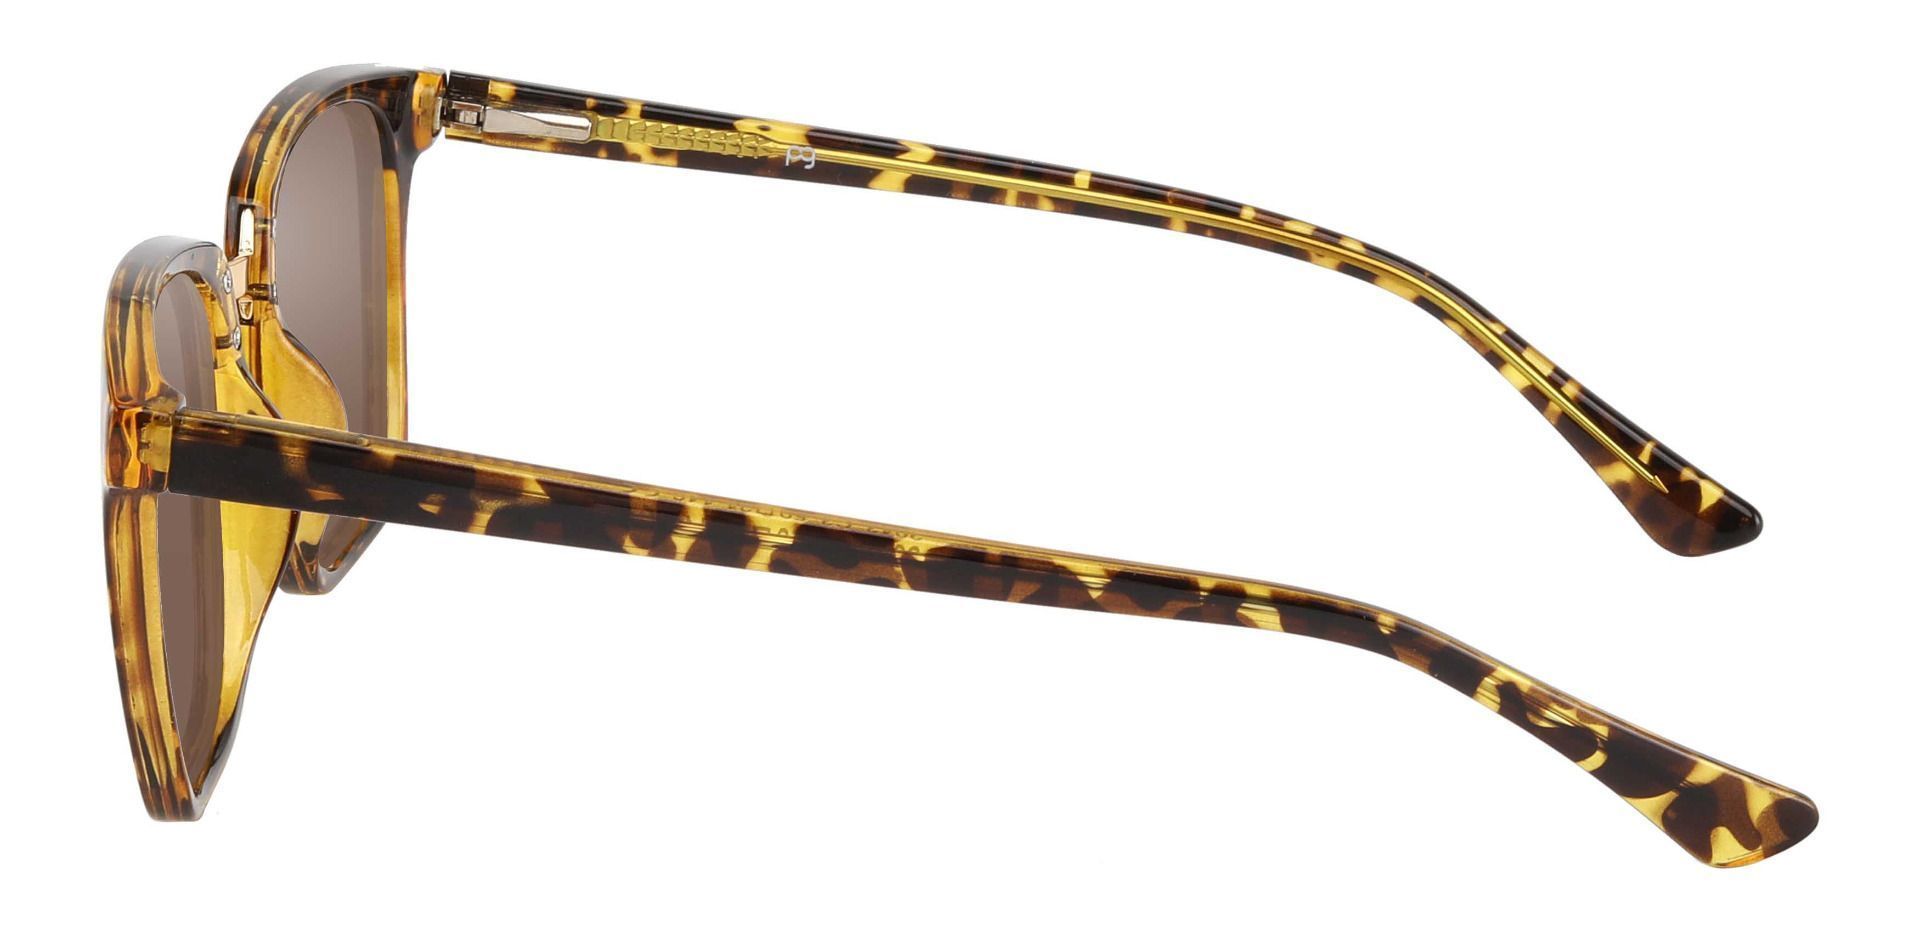 Delta Square Prescription Sunglasses - Tortoise Frame With Brown Lenses